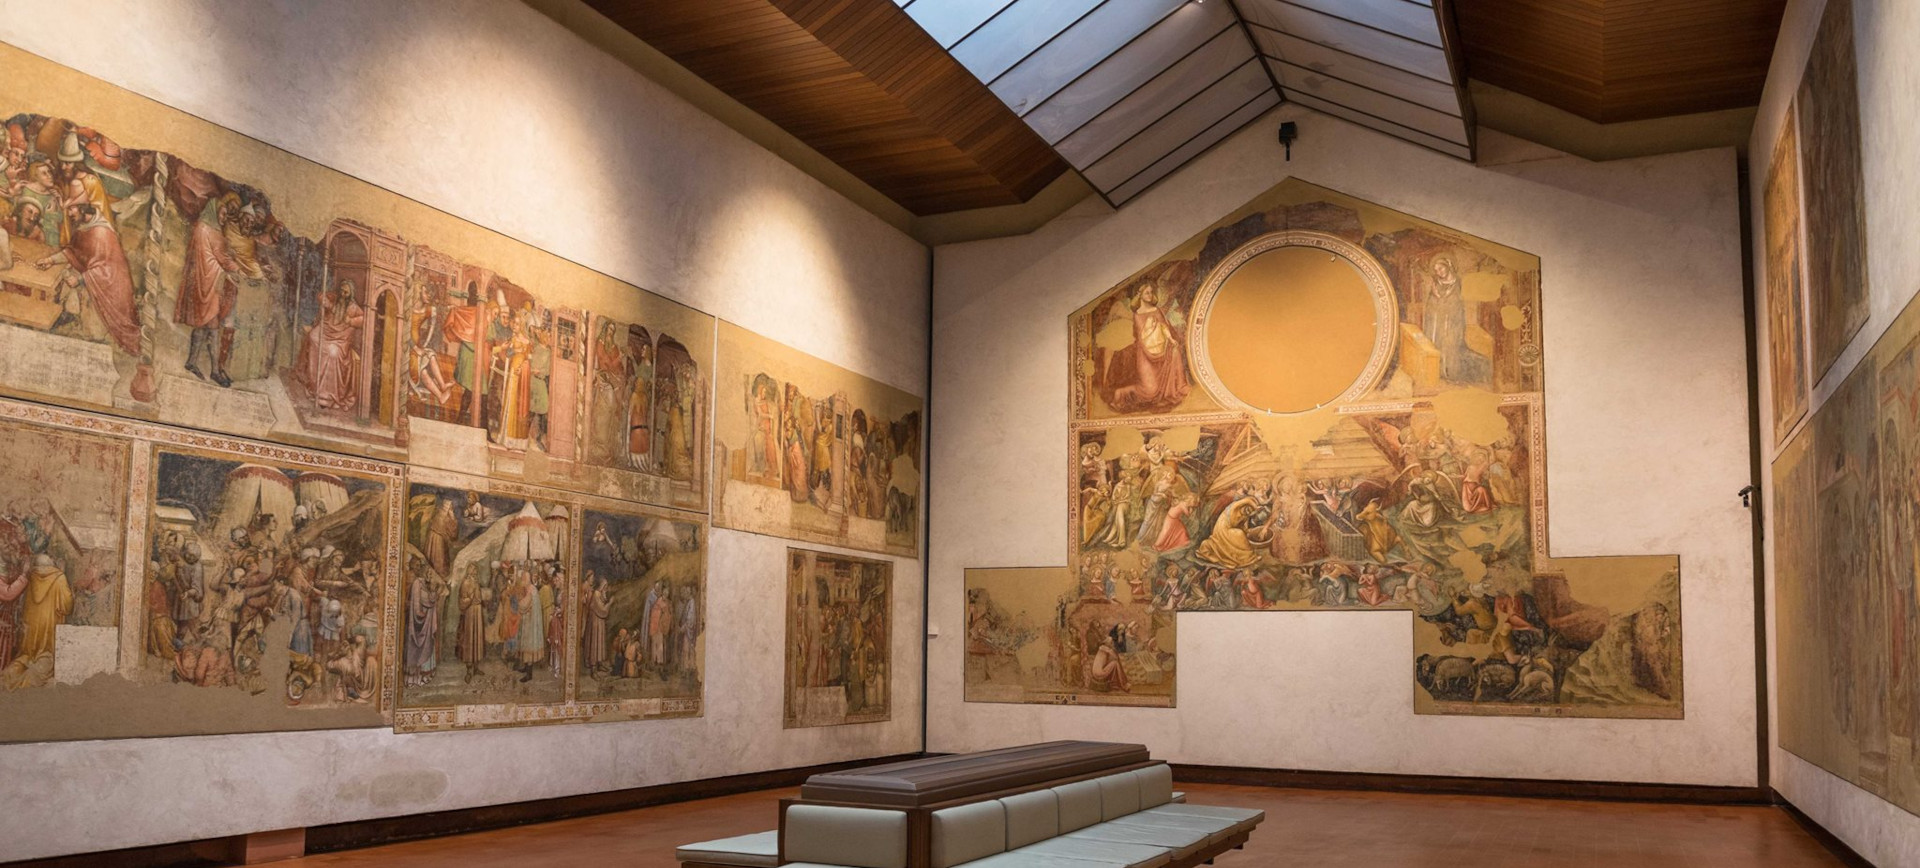 Pinacoteca Nazionale di Bologna -  Affreschi staccati dalla chiesa di Santa Maria di Mezzaratta